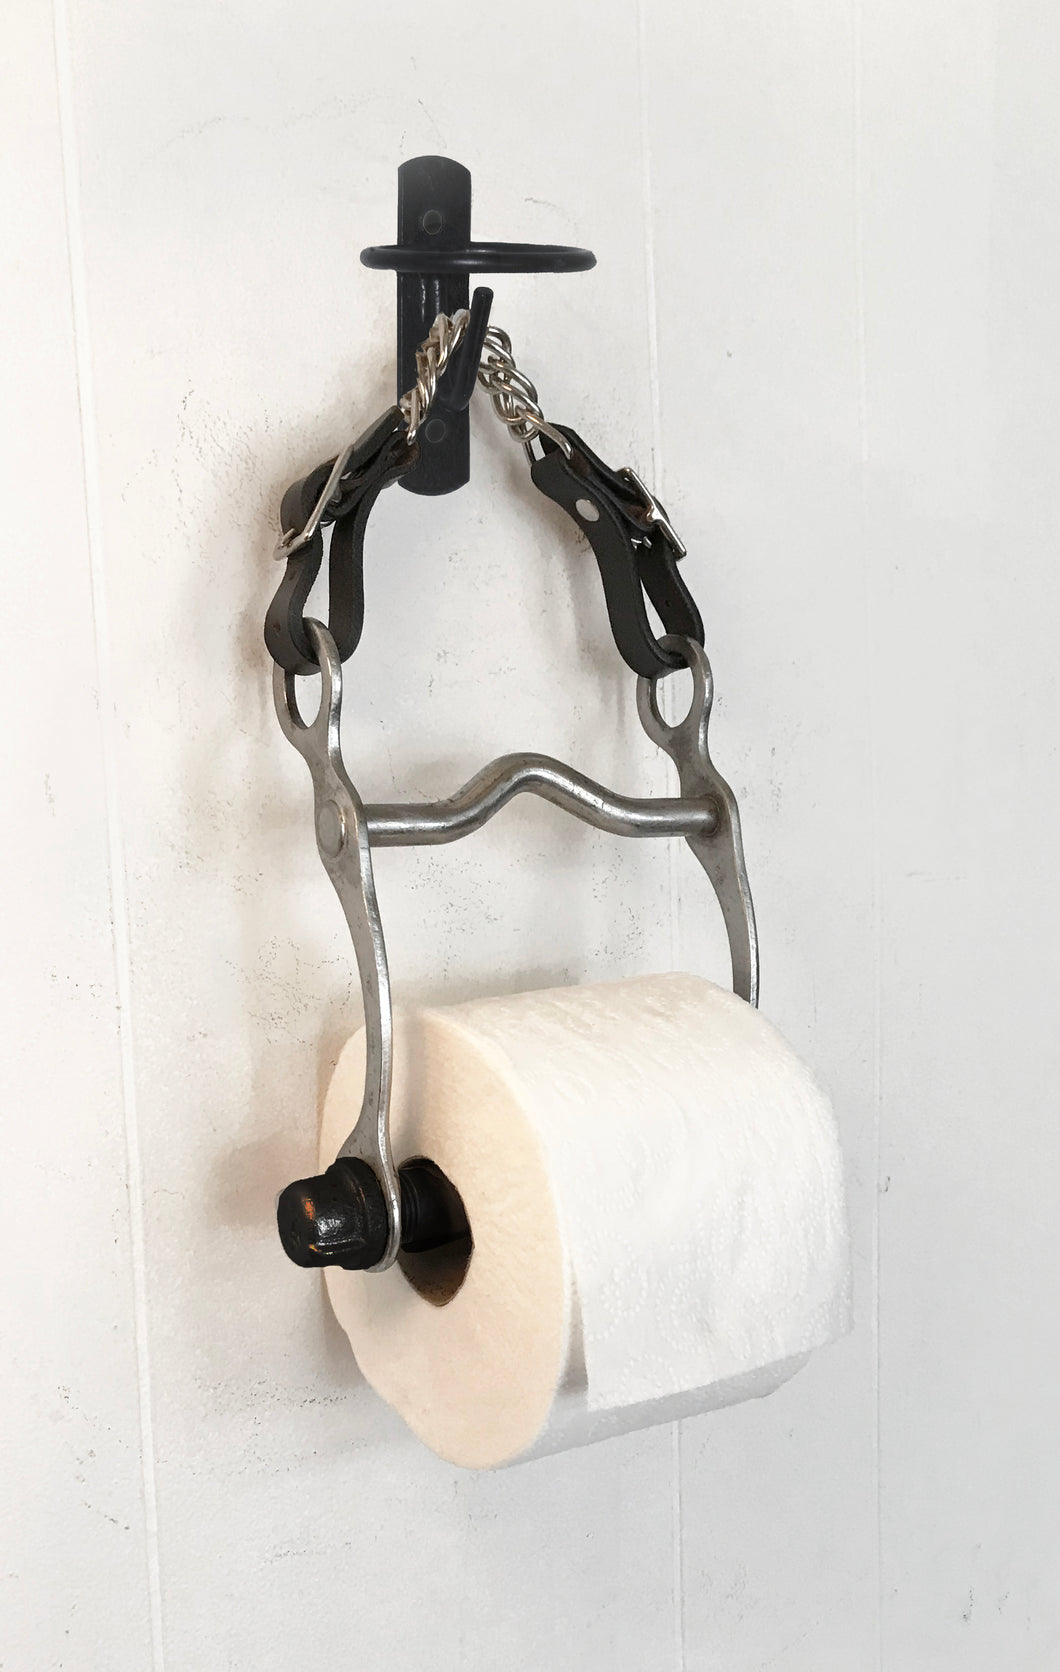 Equestrian Bit Toilet Roll Holder / Tea Towel Hanger, Bath or Kitchen – Curb Bit Horse Decor Gift